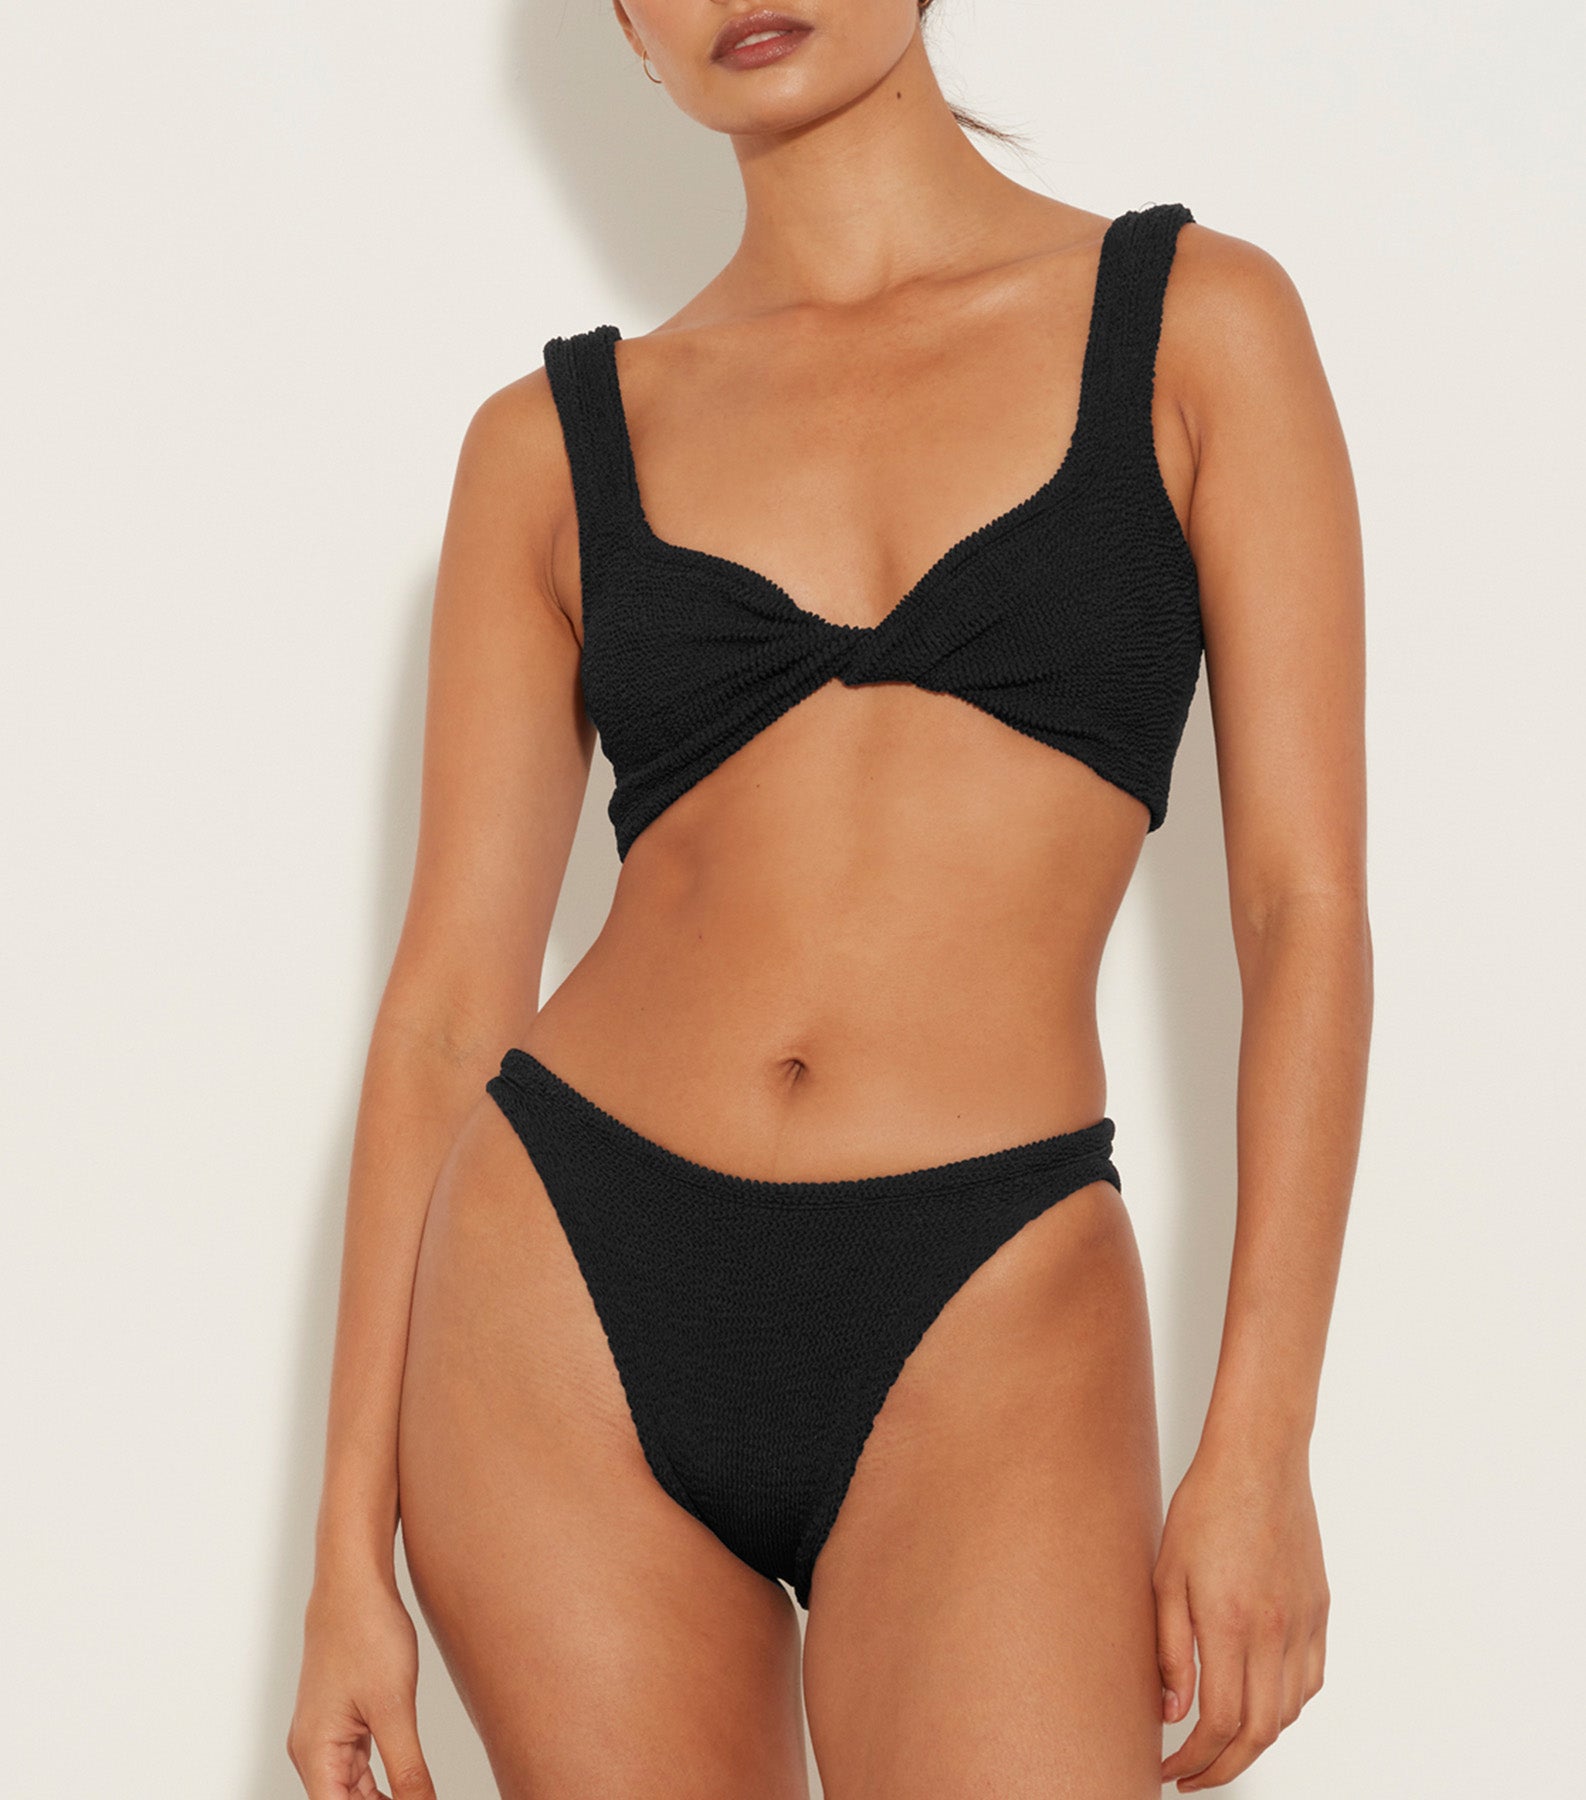 The Hunza G Juno Bikini in Black available at The New Trend Australia.